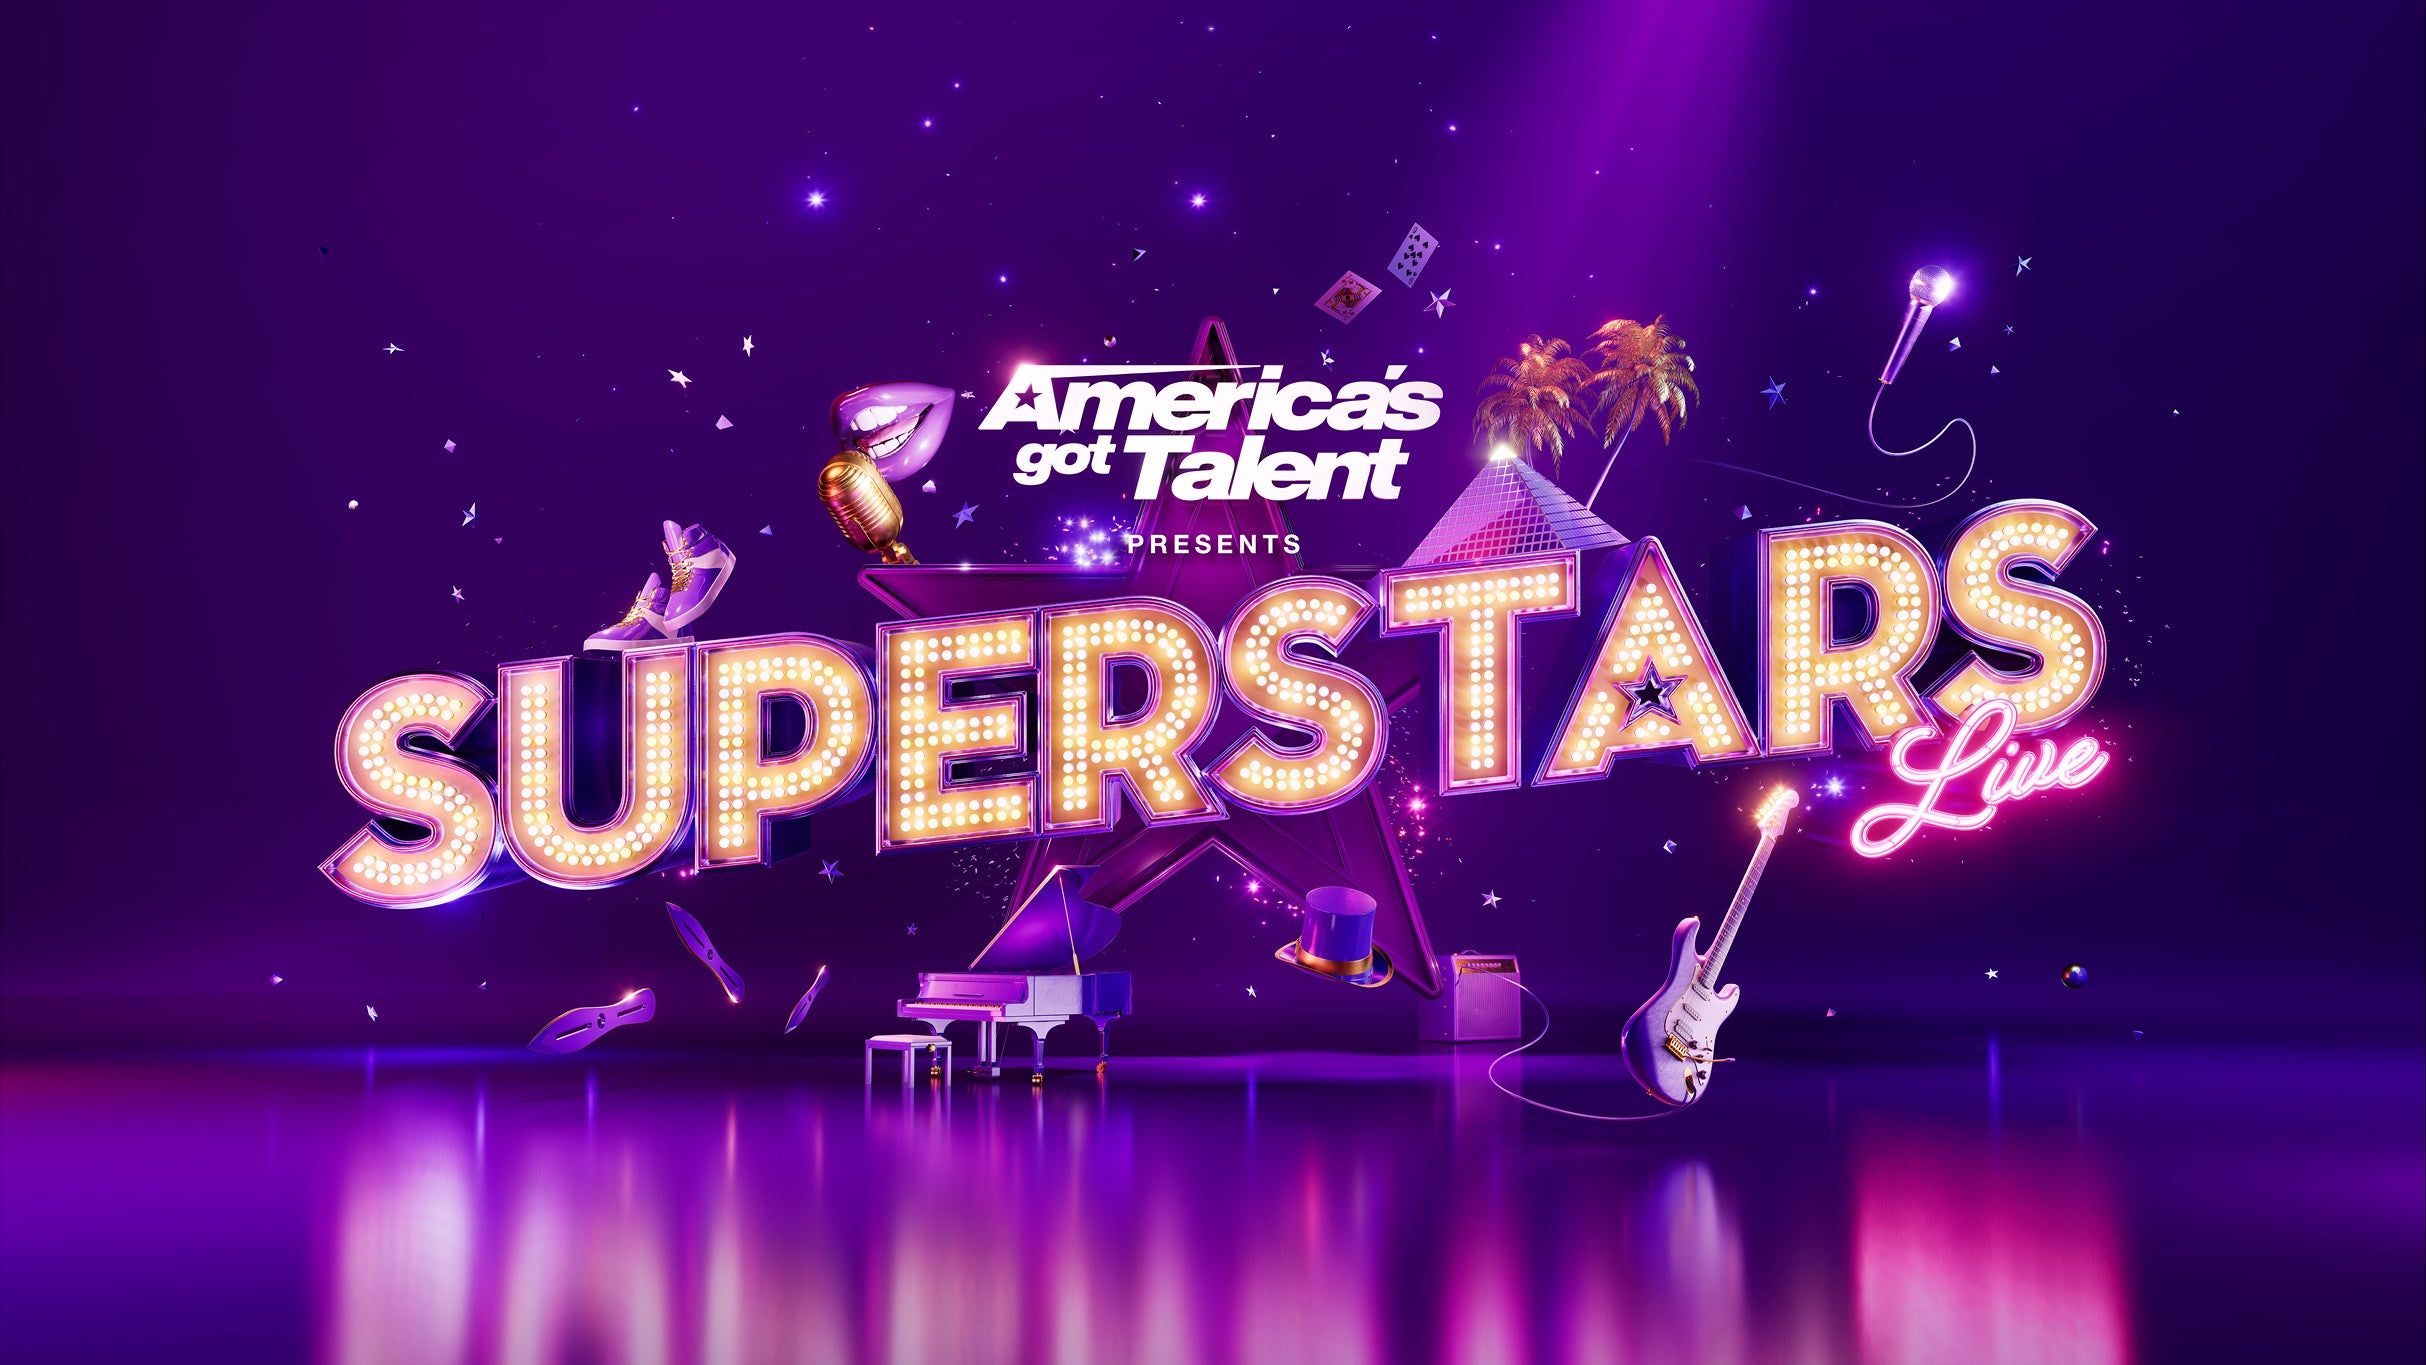 America's Got Talent presents Superstars Live in Las Vegas promo photo for 2 for 1 presale offer code